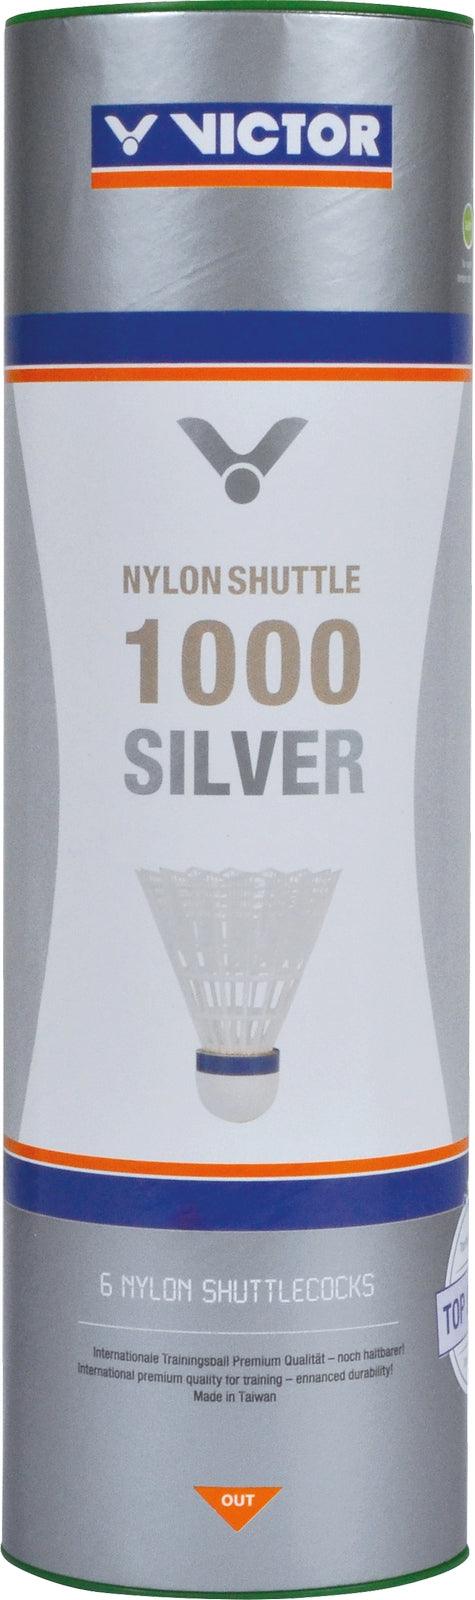 VICTOR NYLON SHUTTLE 1000 SILVER 6PC TUBE MEDIUM SPEED WHITE - Bassline Retail